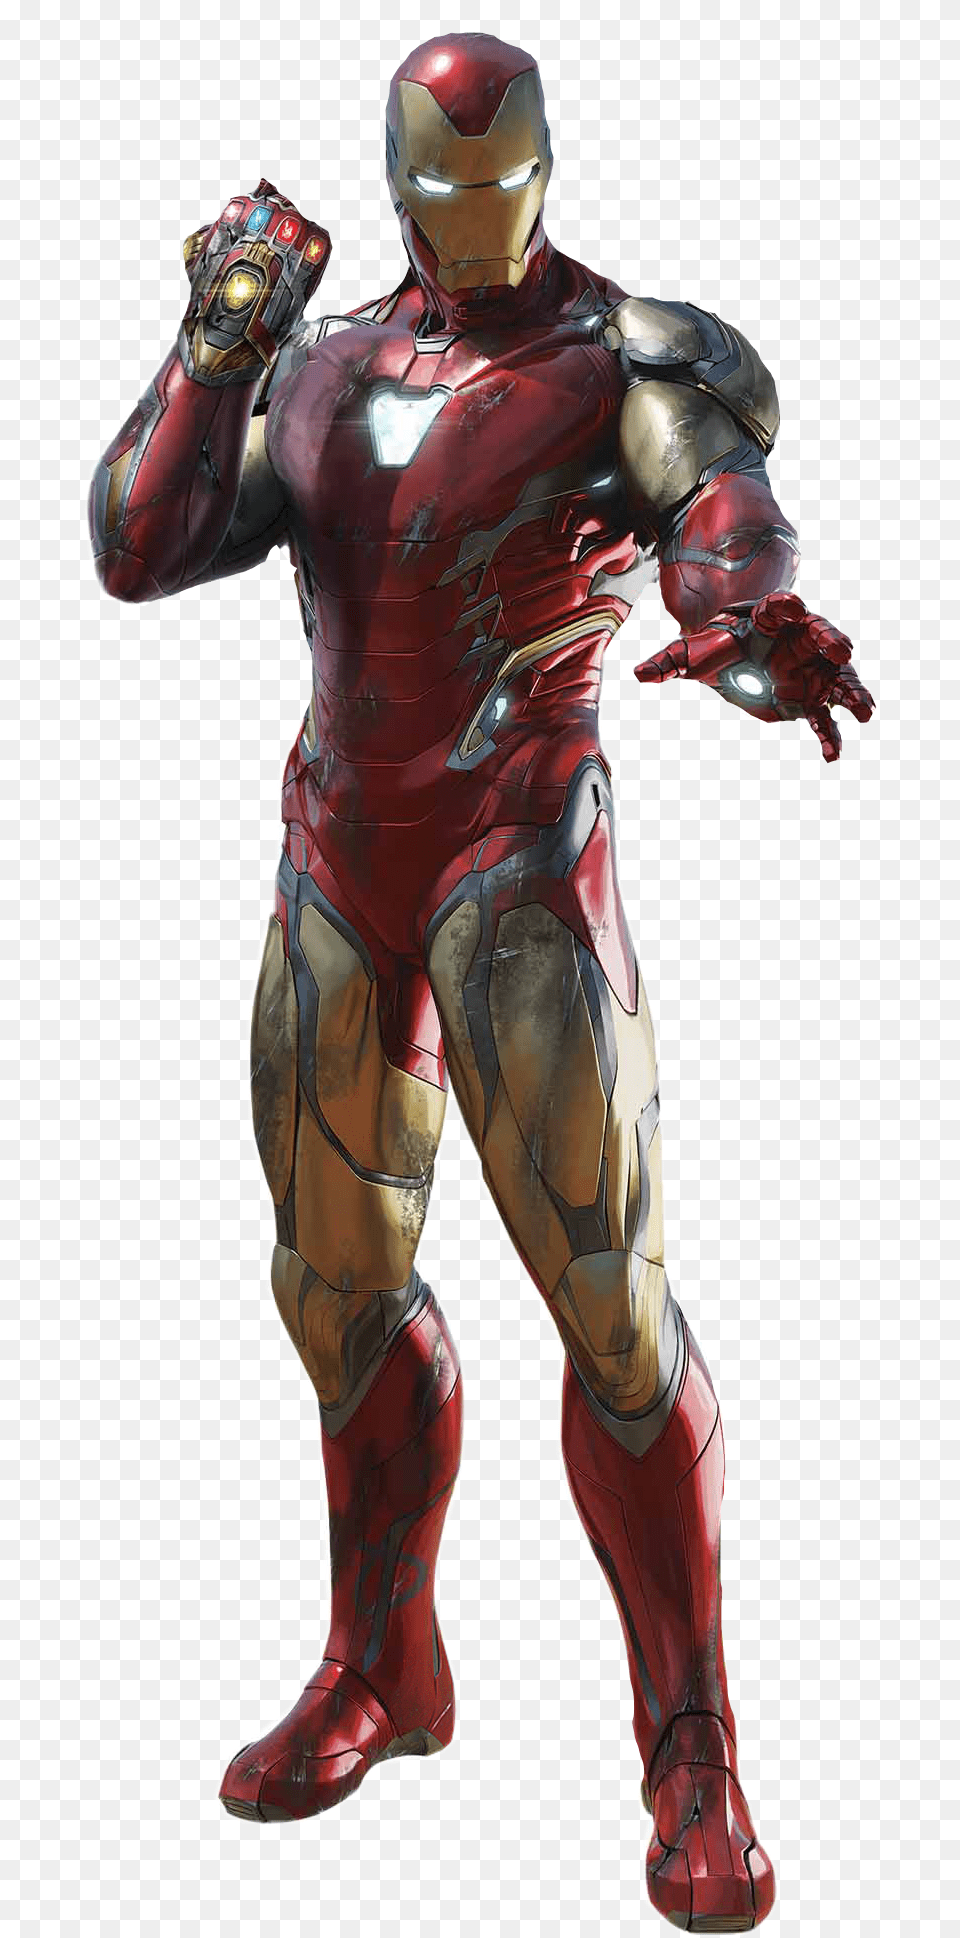 Ironman Avengers Avengersendgame Thanos Infinitygauntlet Iron Man Gauntlet, Adult, Male, Person, Armor Free Transparent Png